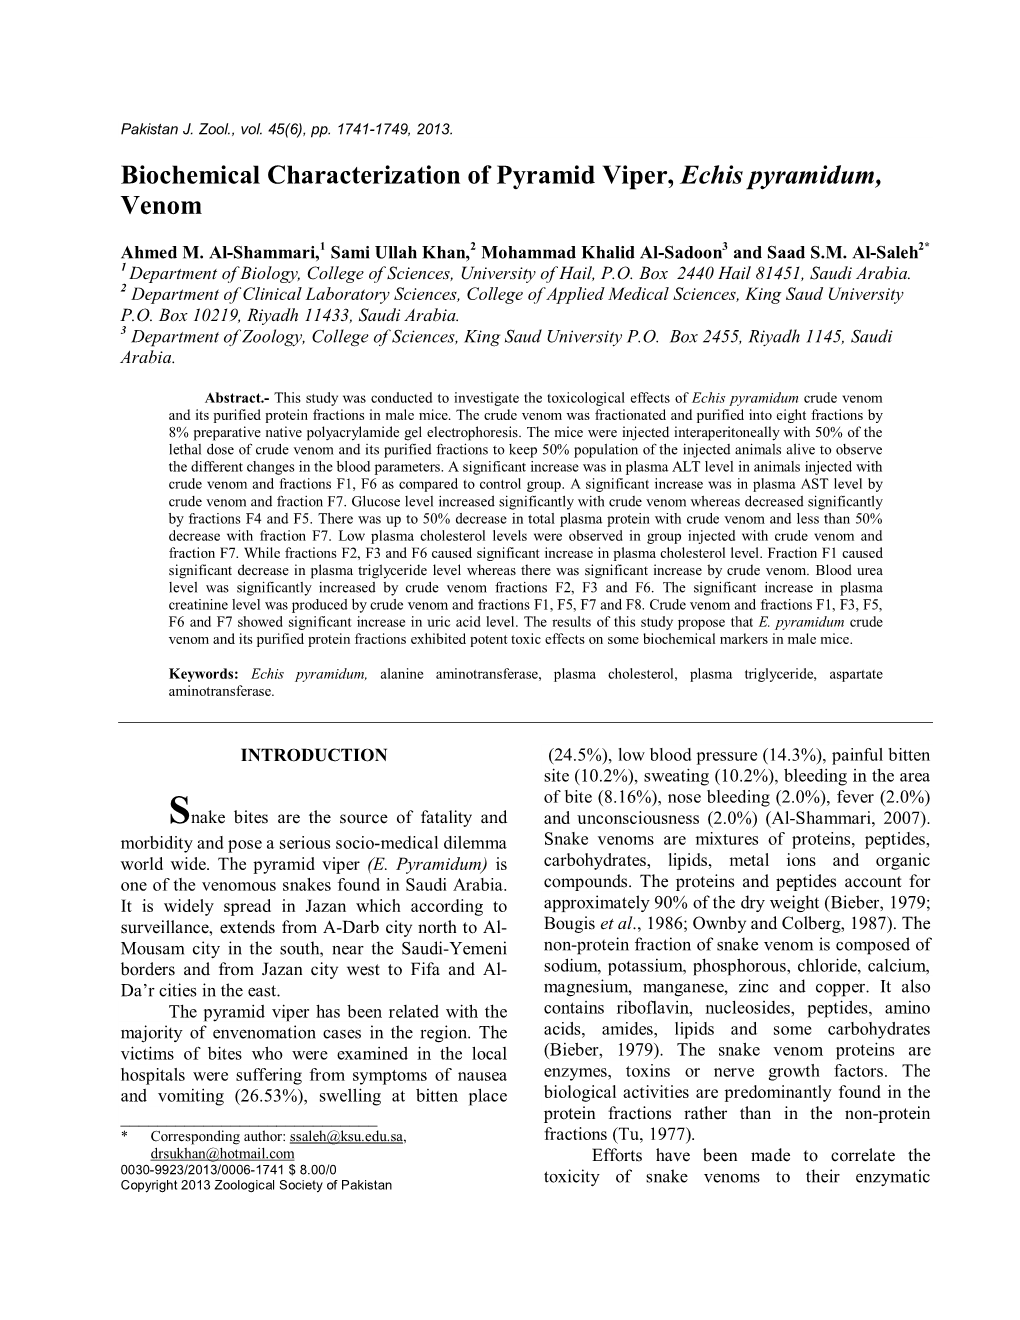 Biochemical Characterization of Pyramid Viper, Echis Pyramidum, Venom